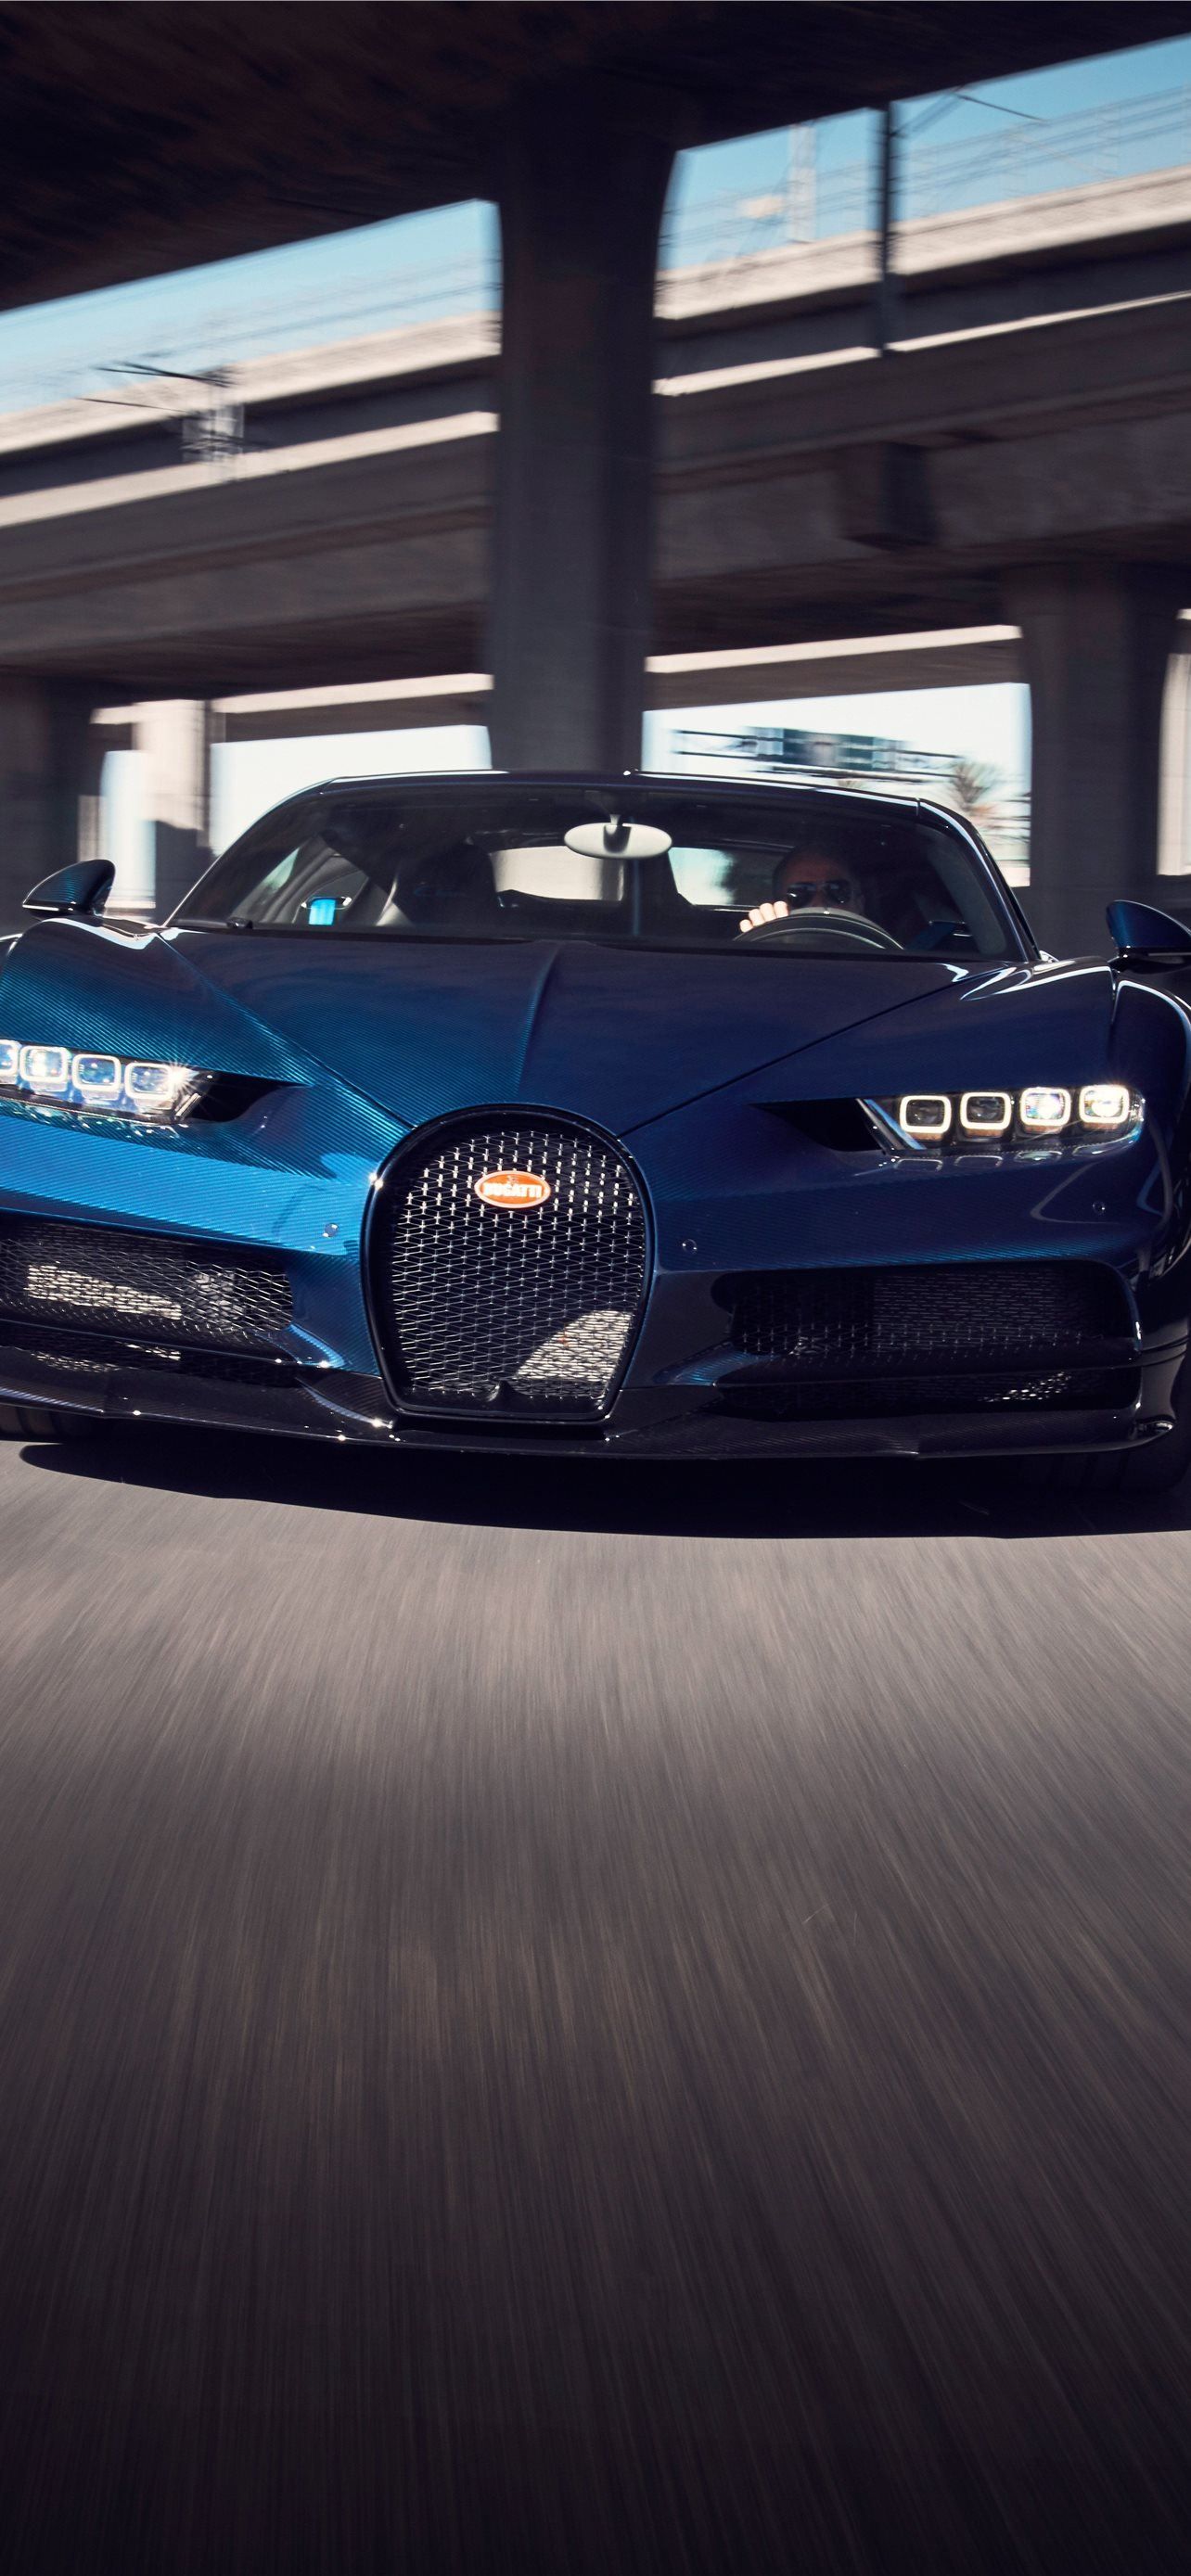 Blue Bugatti Chiron Pur Sport 2021 ID 7152 iPhone Wallpaper Free Download